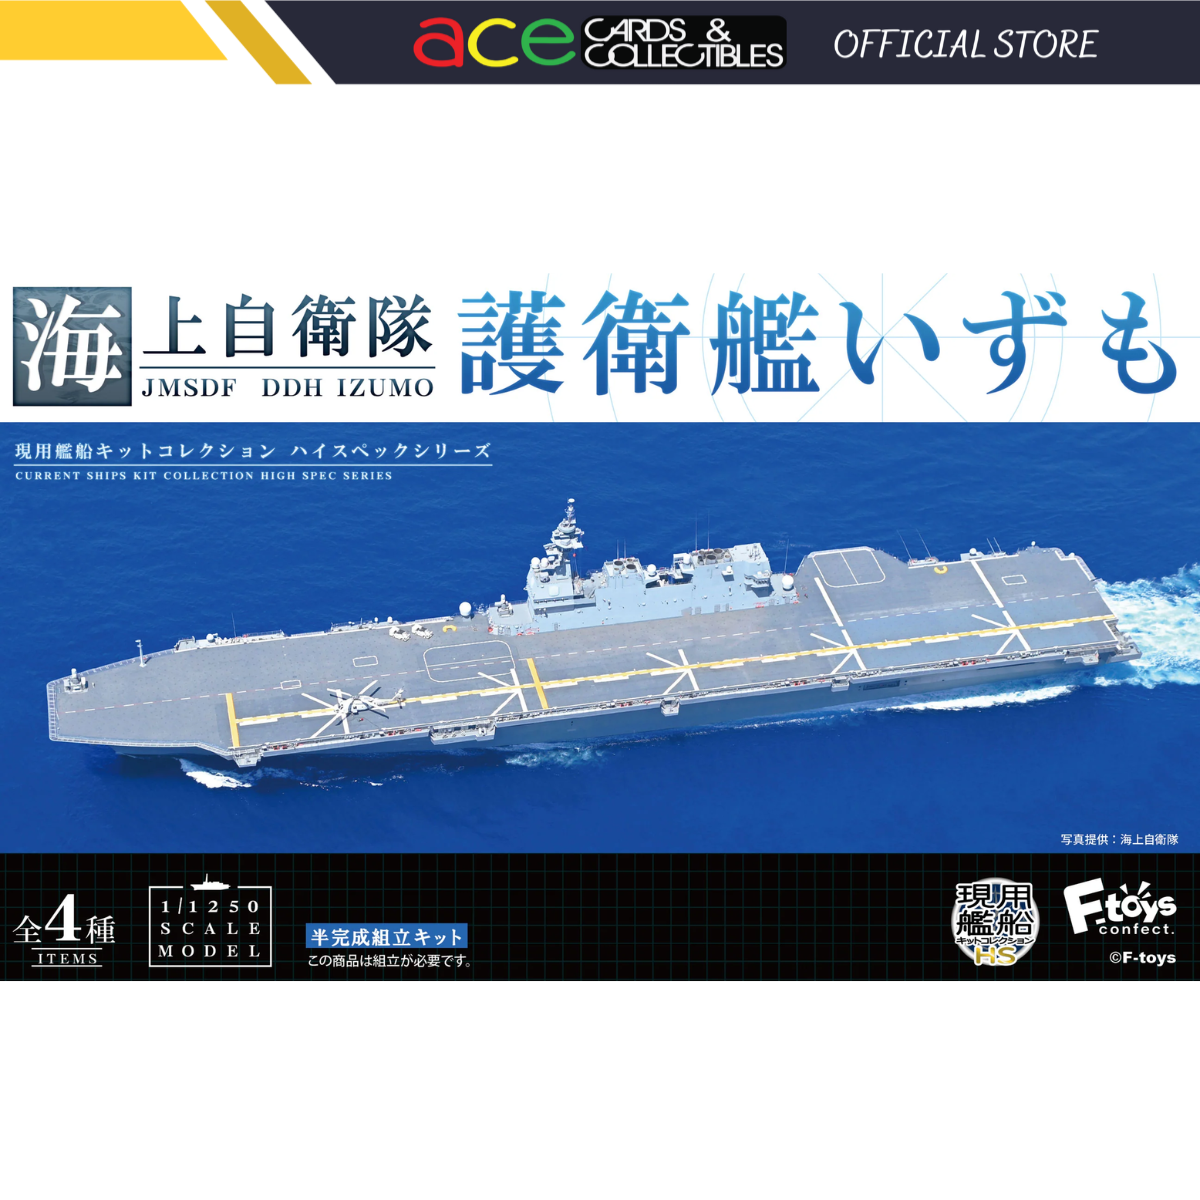 Japan Maritime Self-Defense Force DDH Izumo-Single Box (Random)-F-toys confect-Ace Cards & Collectibles